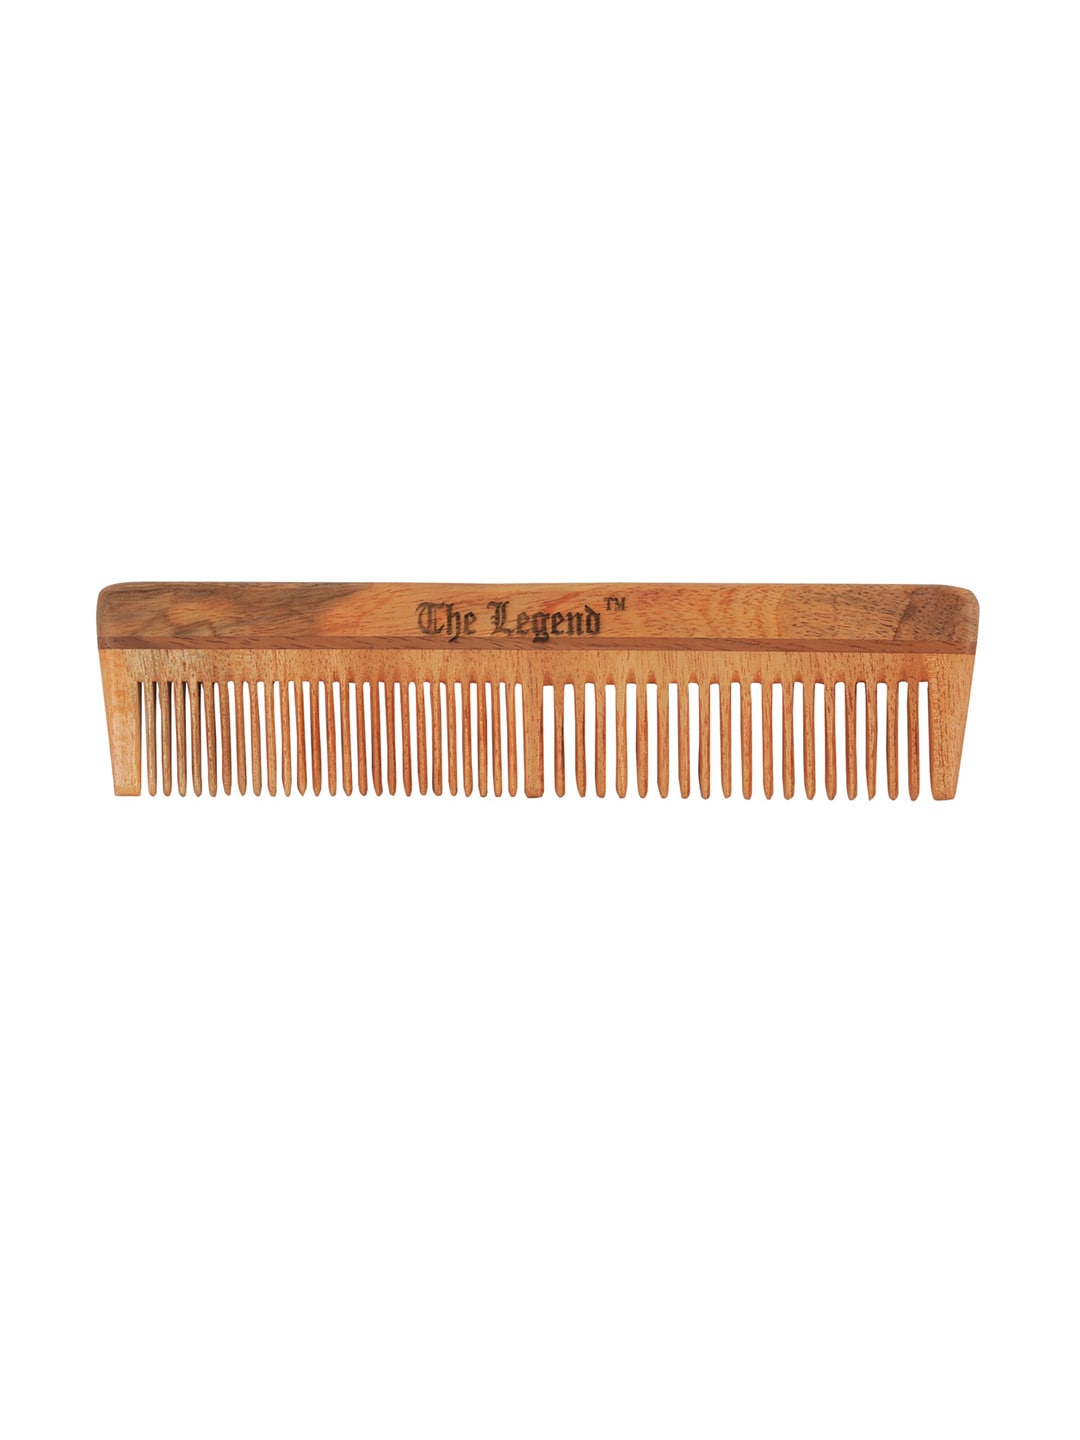 The Legend Organic Neem Wood Comb Price in India